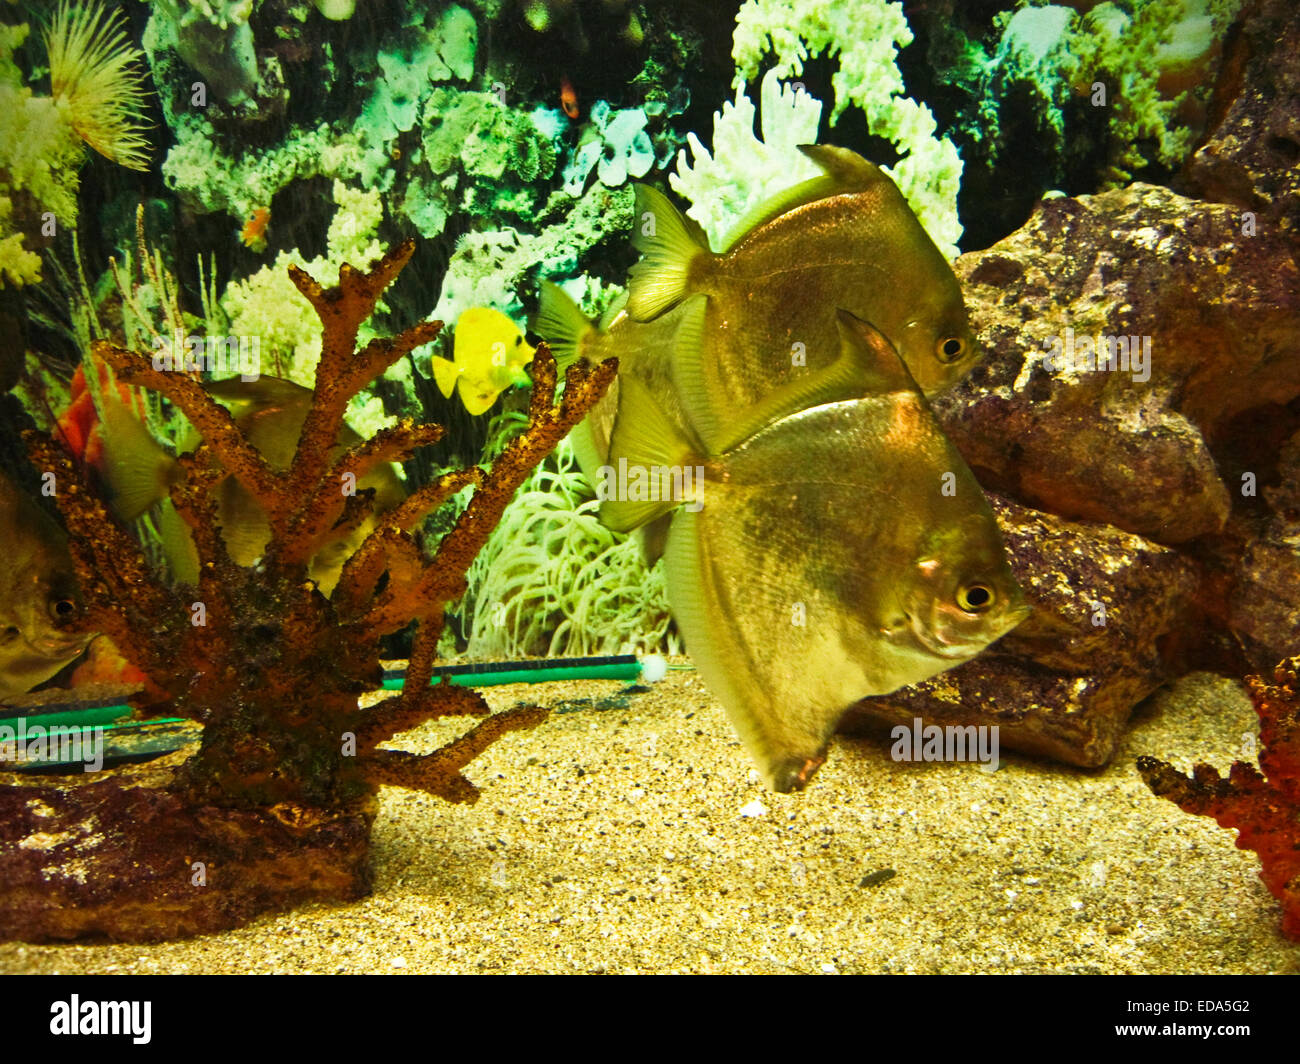 Two tropical fishes Monodactylus argenteus (Silver monodactylus), recorded in aquarium of town Yalta, Crimea. Stock Photo